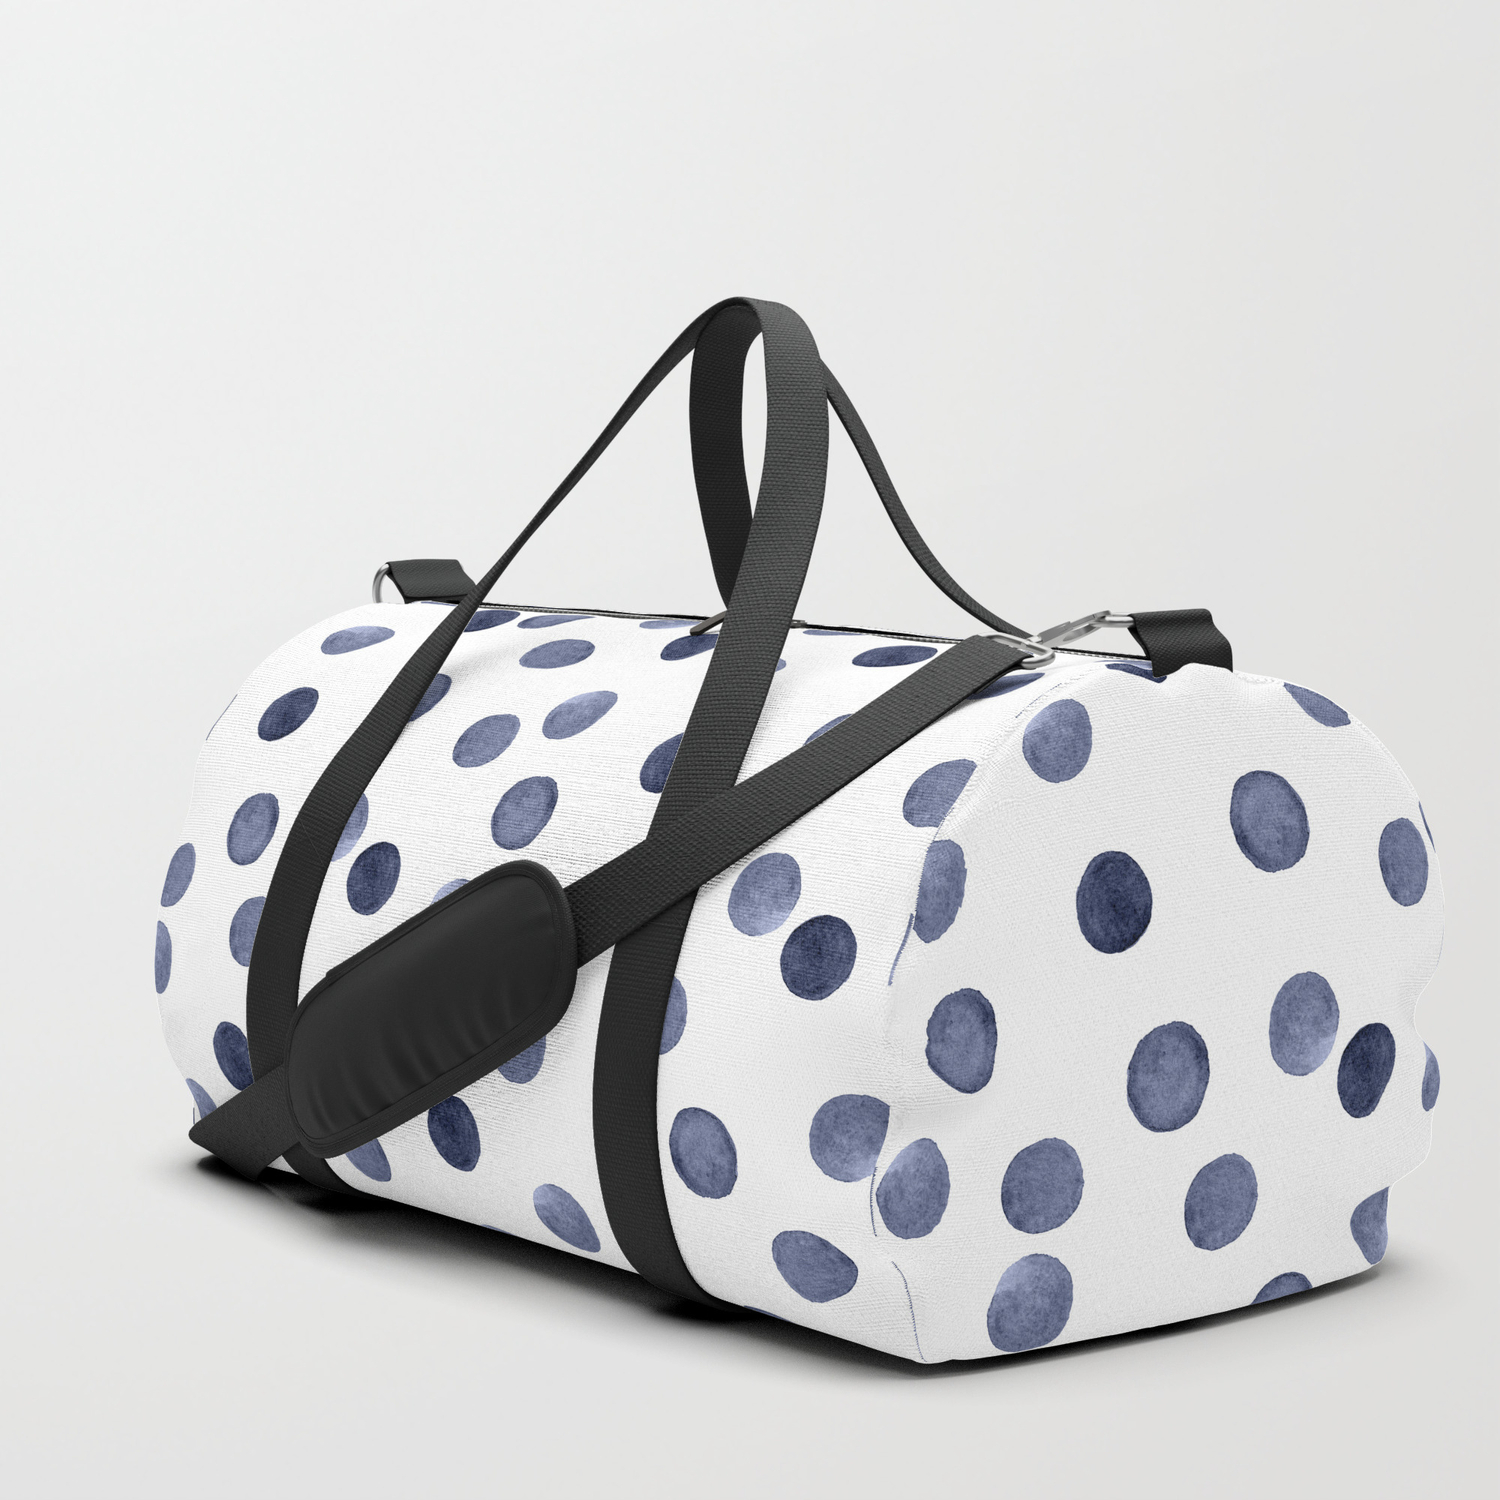 MALPLENA Bird Dreamer Polka Dot Pattern Drum gym duffel bag women Travel Bag